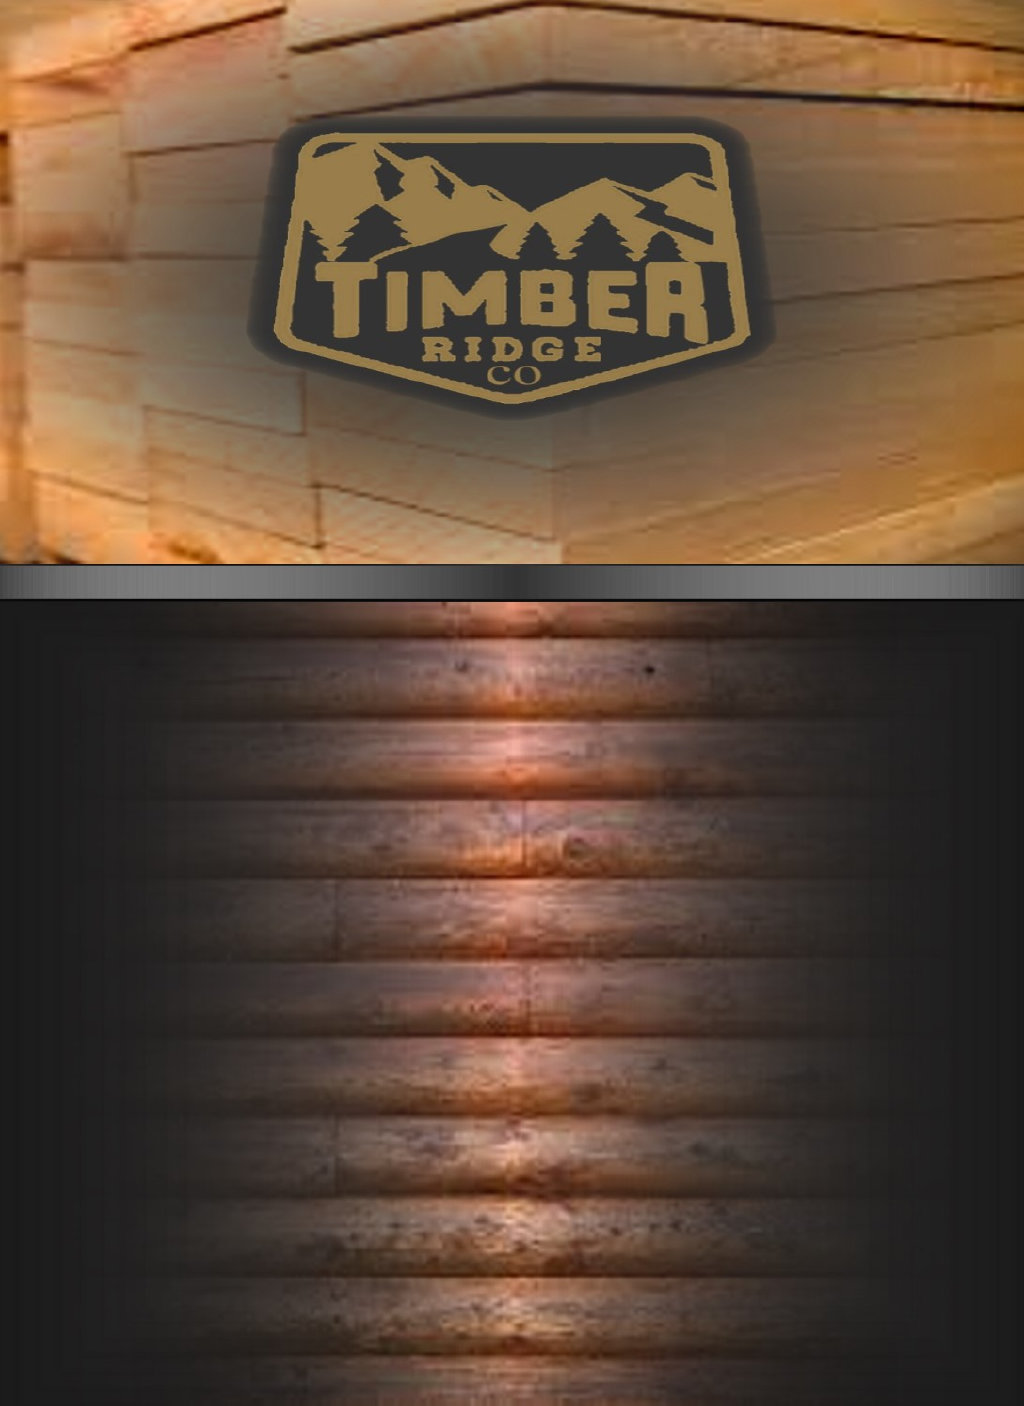 timber_ridge_co003003.jpg